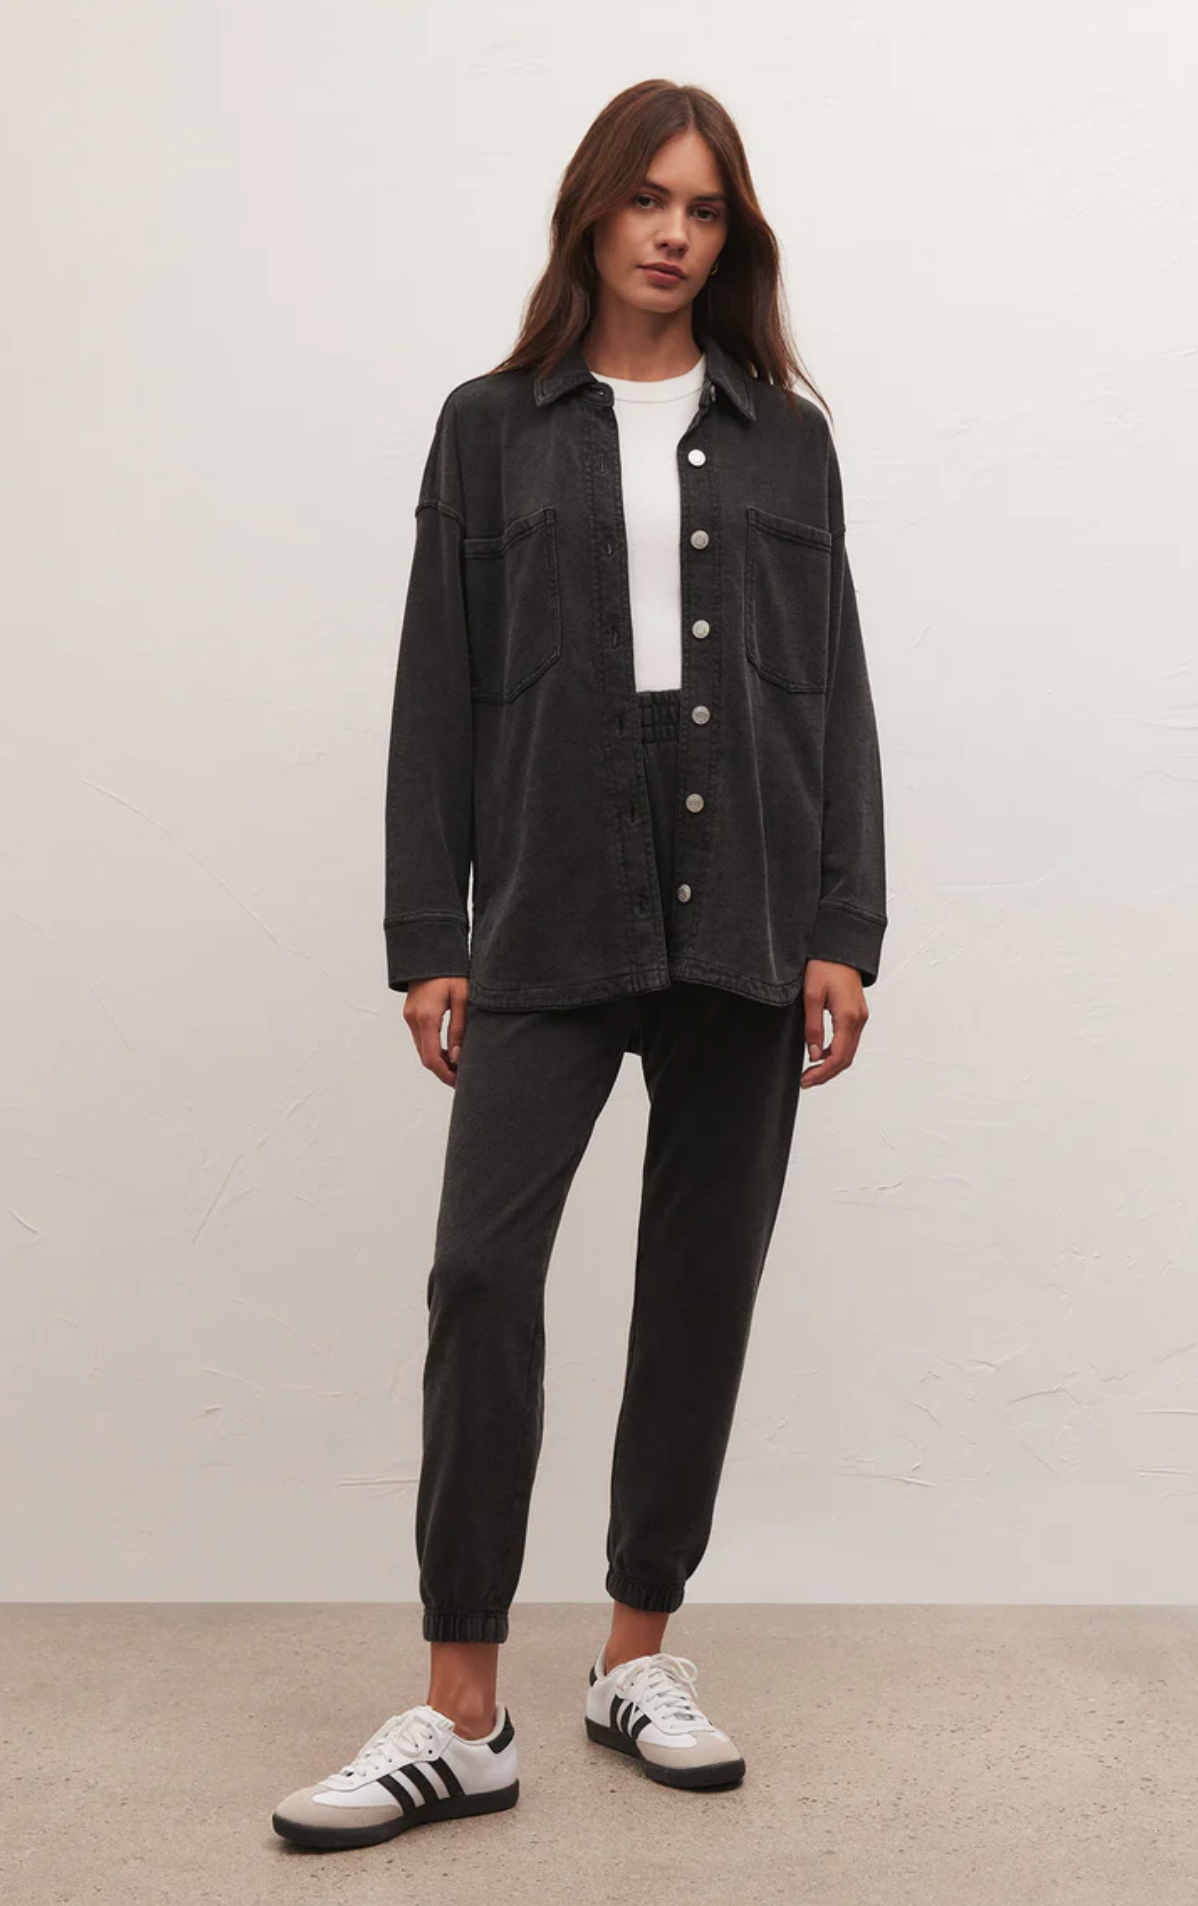 Z Supply All Day Knit Denim Jacket in Vintage Black